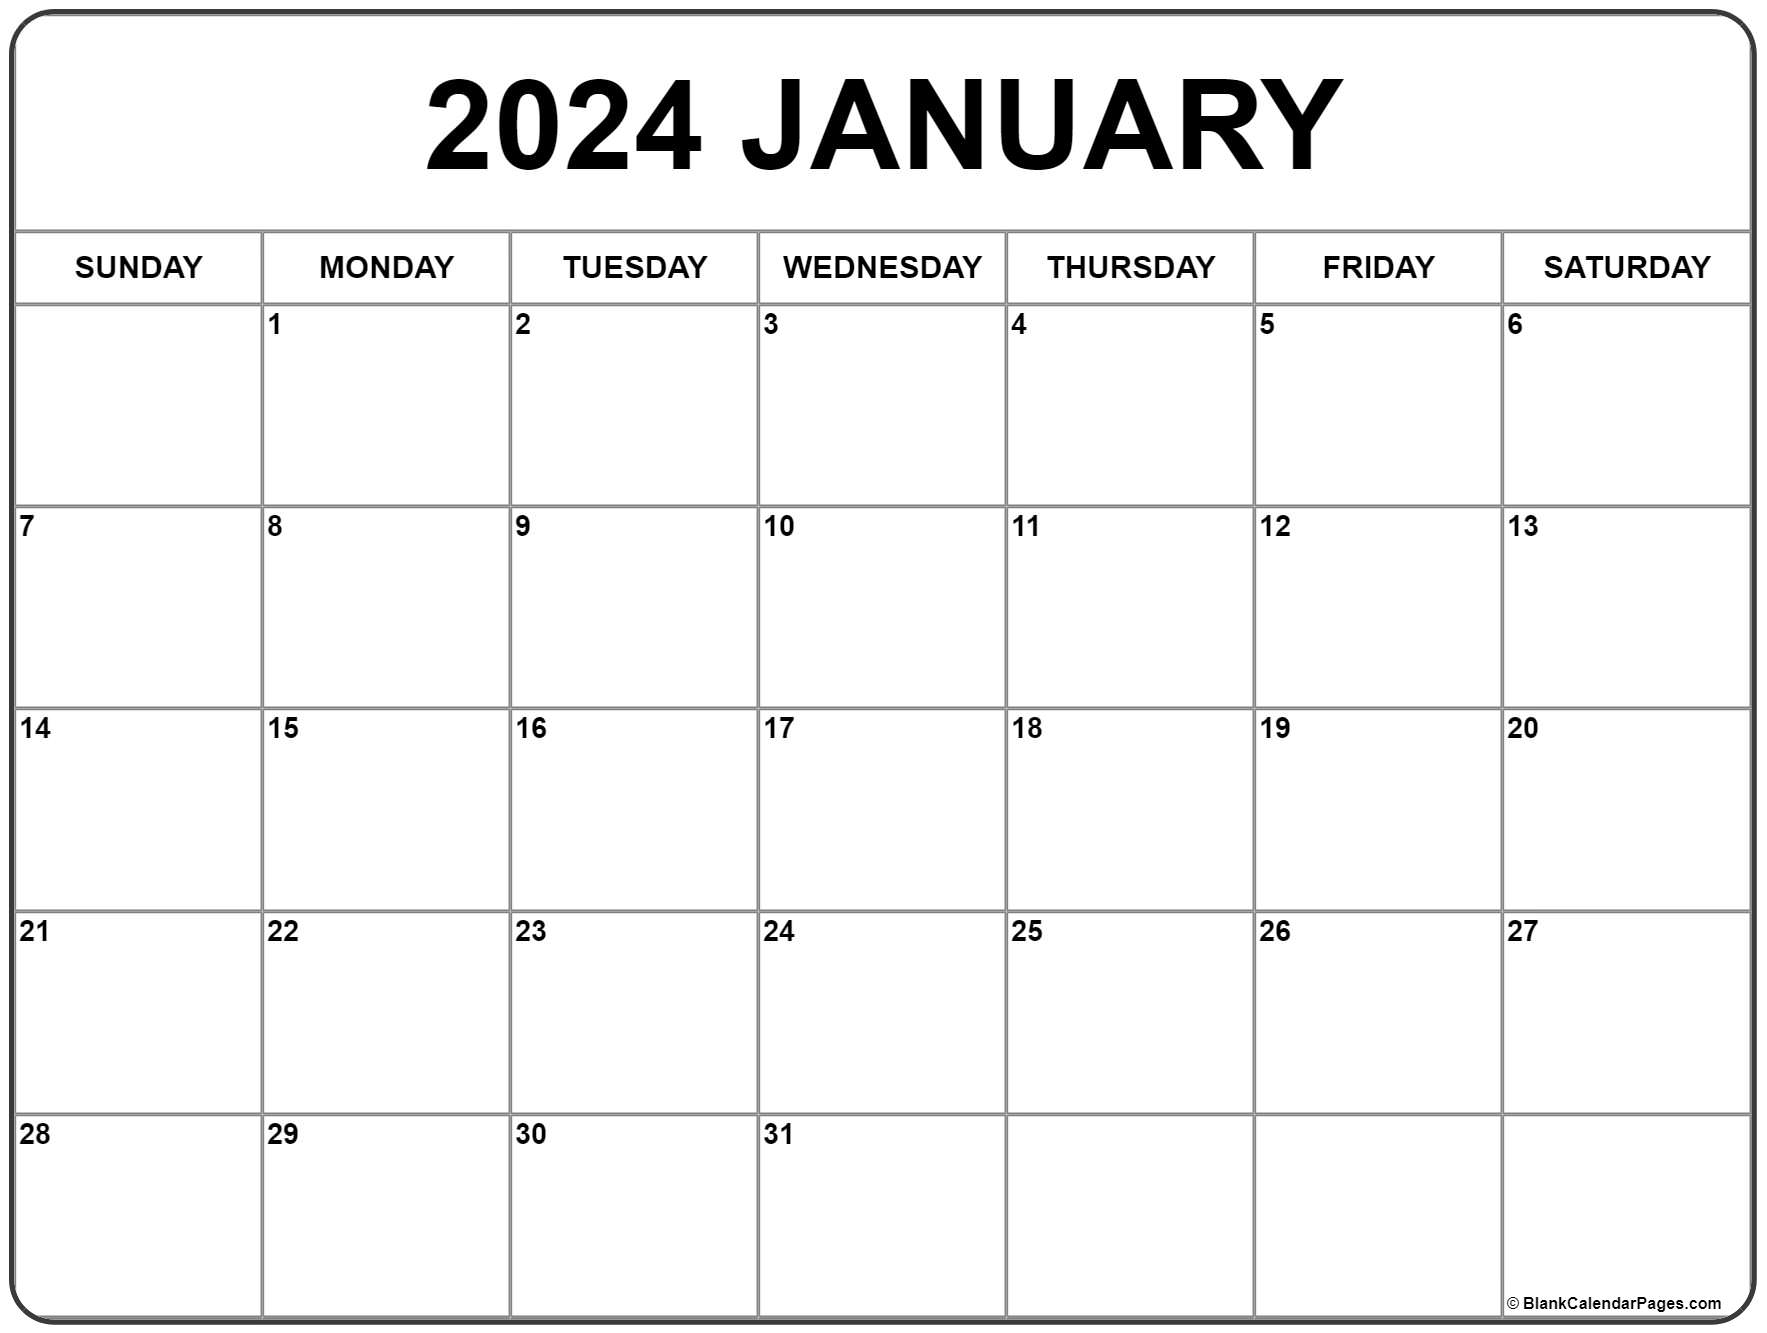 January 2021 Calendar Free Printable Monthly Calendars